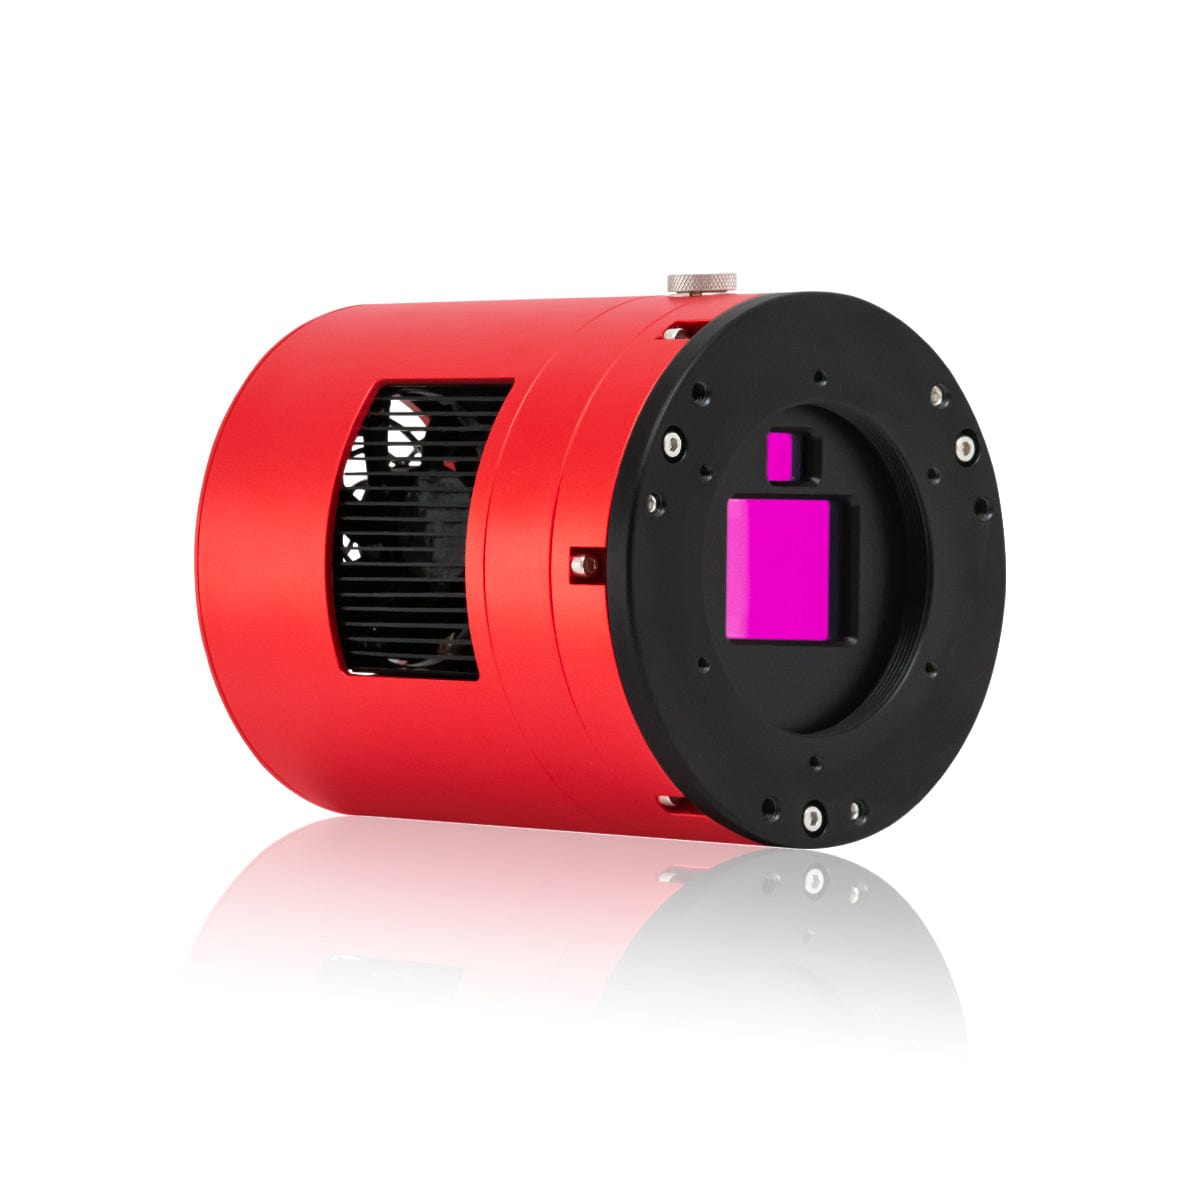 ZWO Camera ZWO ASI2600MC DUO Cooled Colour CMOS Astrophotography Camera with Built in Guiding Sensor - ASI2600MC-DUO